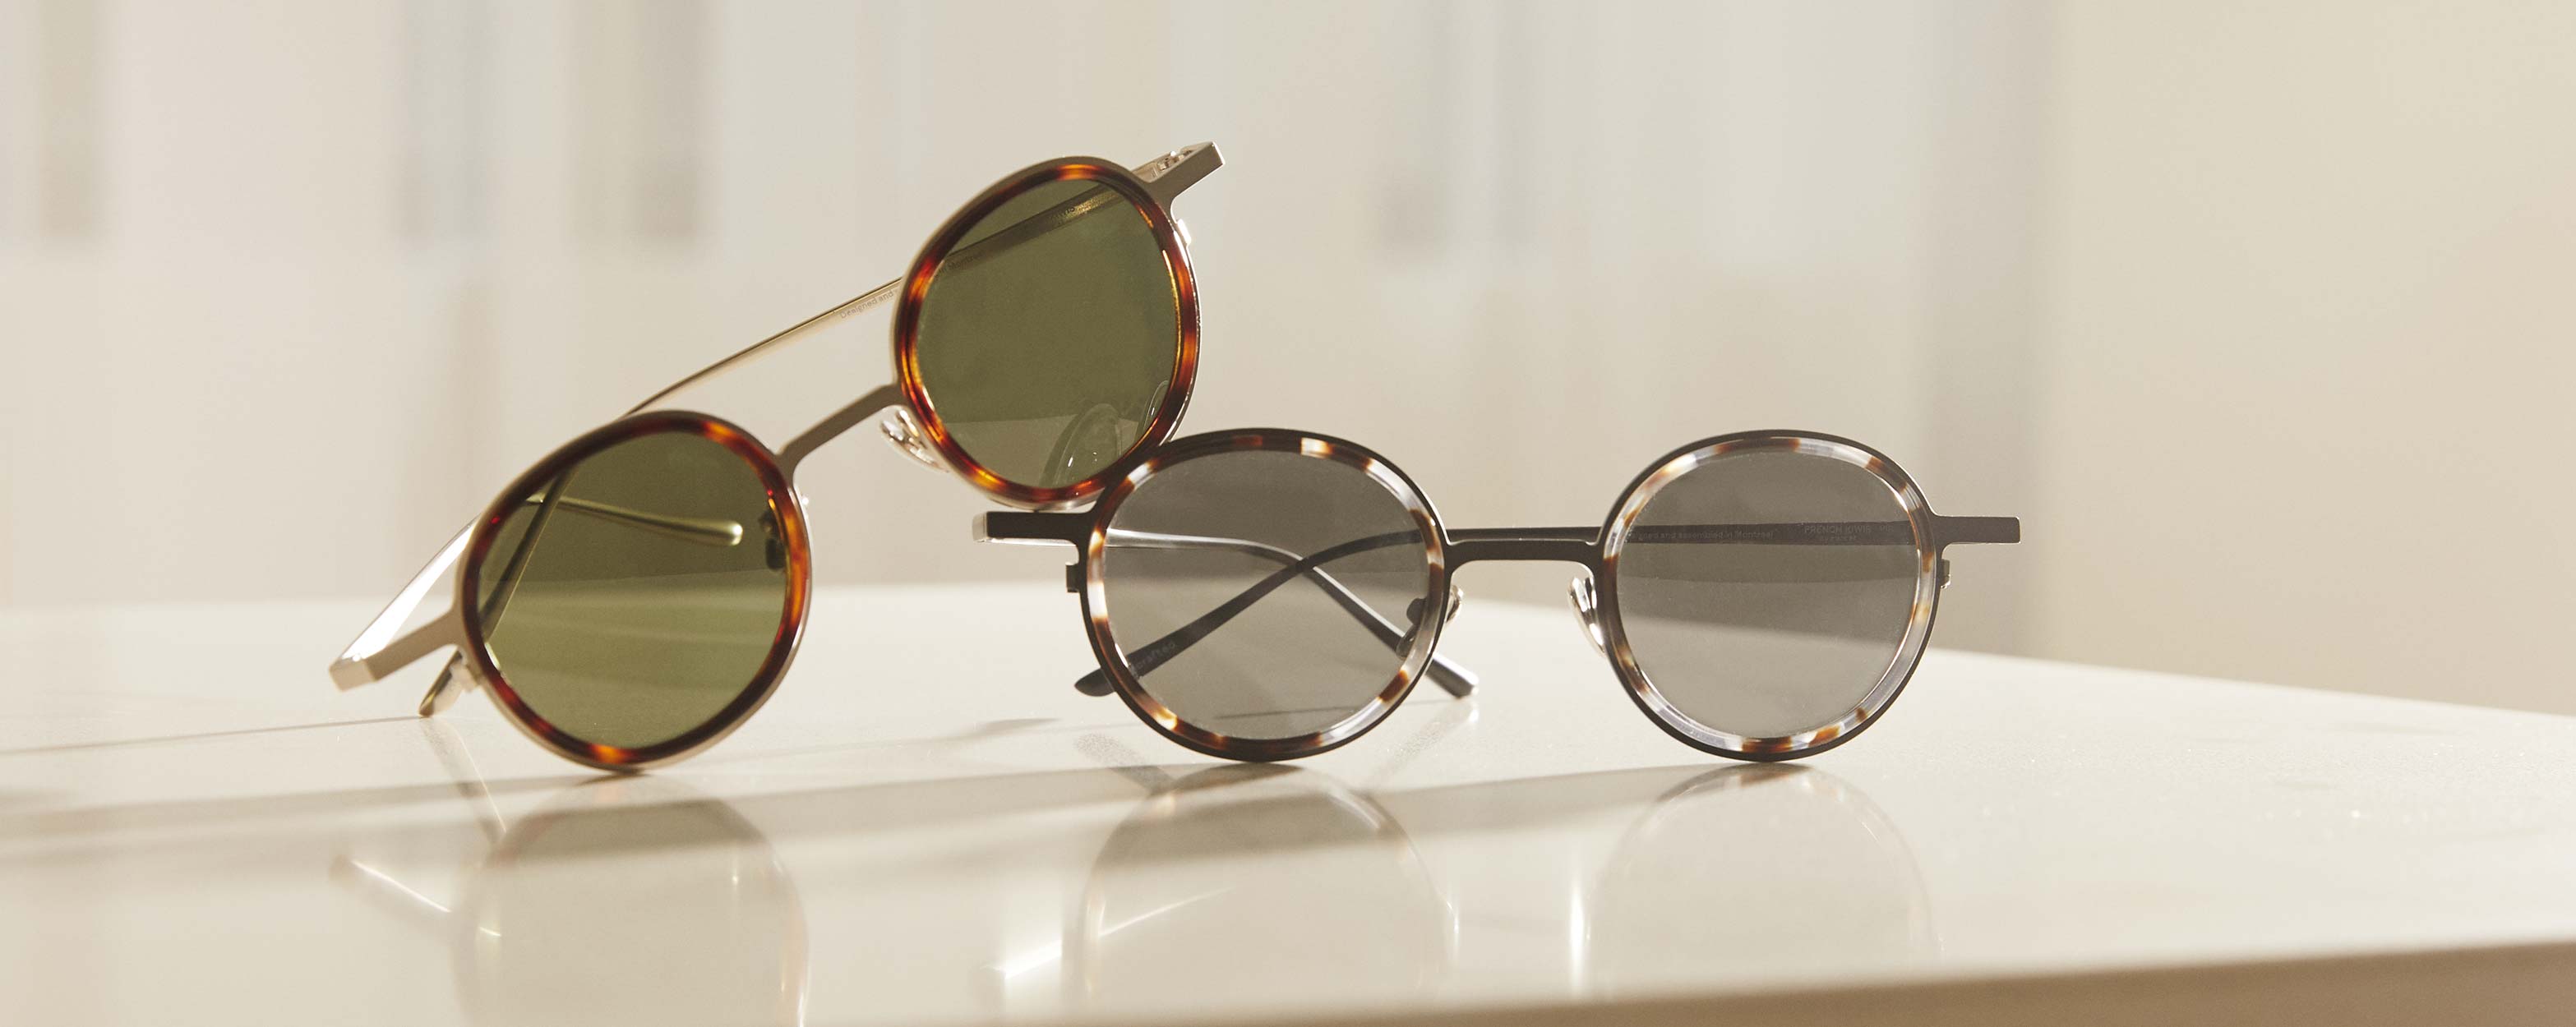 Photo Details of Arthur Sun Tortoise & Mat Silver Sun Glasses in a room